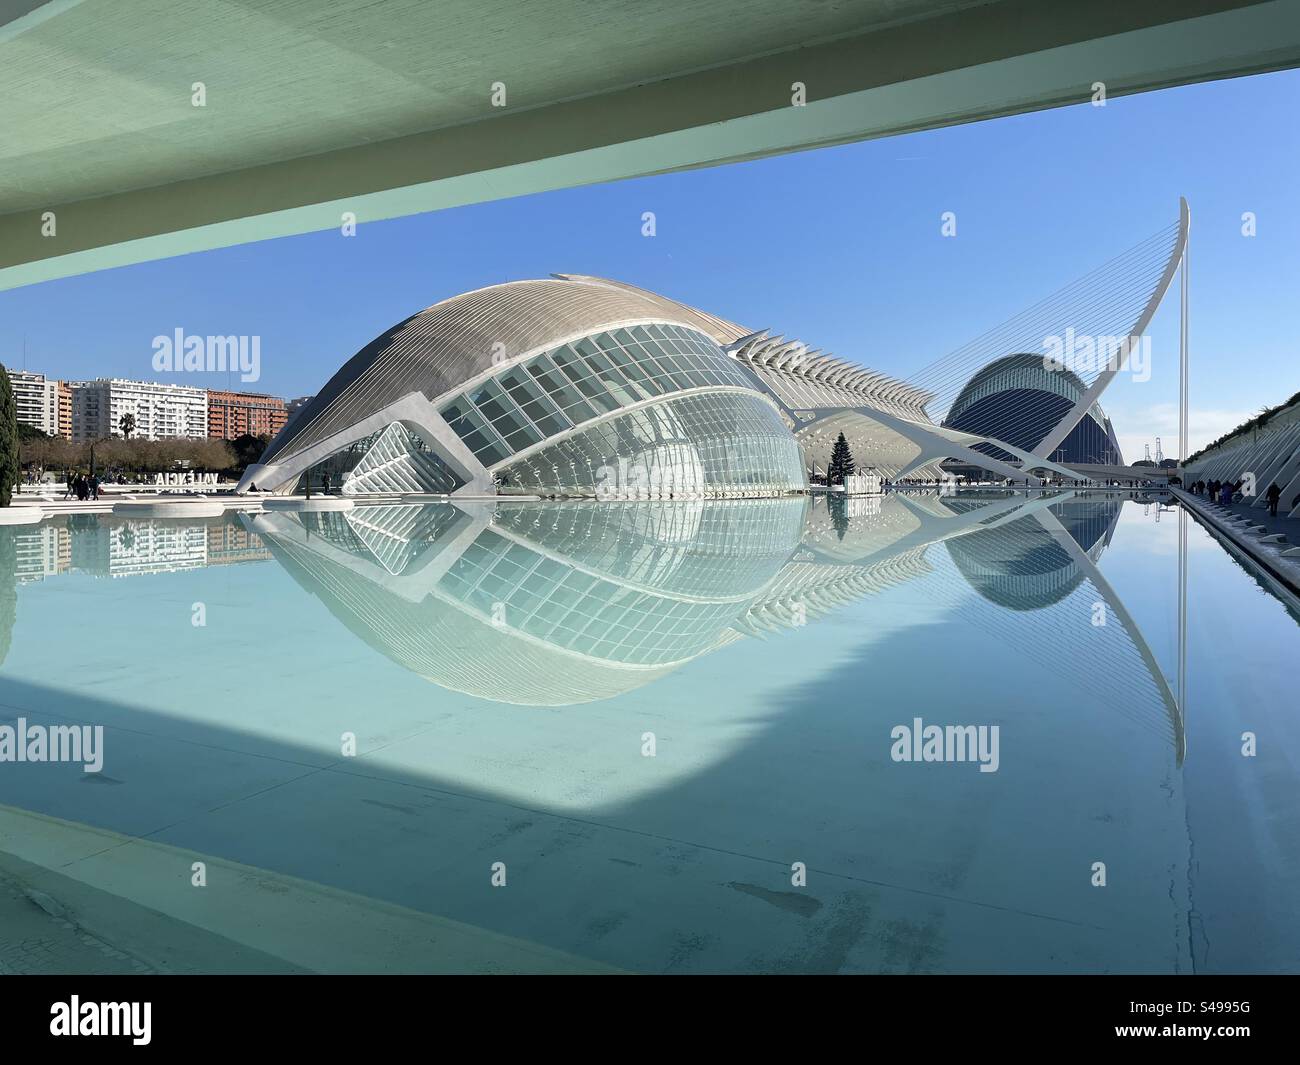 City of Arts and Sciences, Valencia. One of the buildings designed by architect Santiago Calatrava, the Hemisféric- IMAX cinema and digital films. Stock Photo